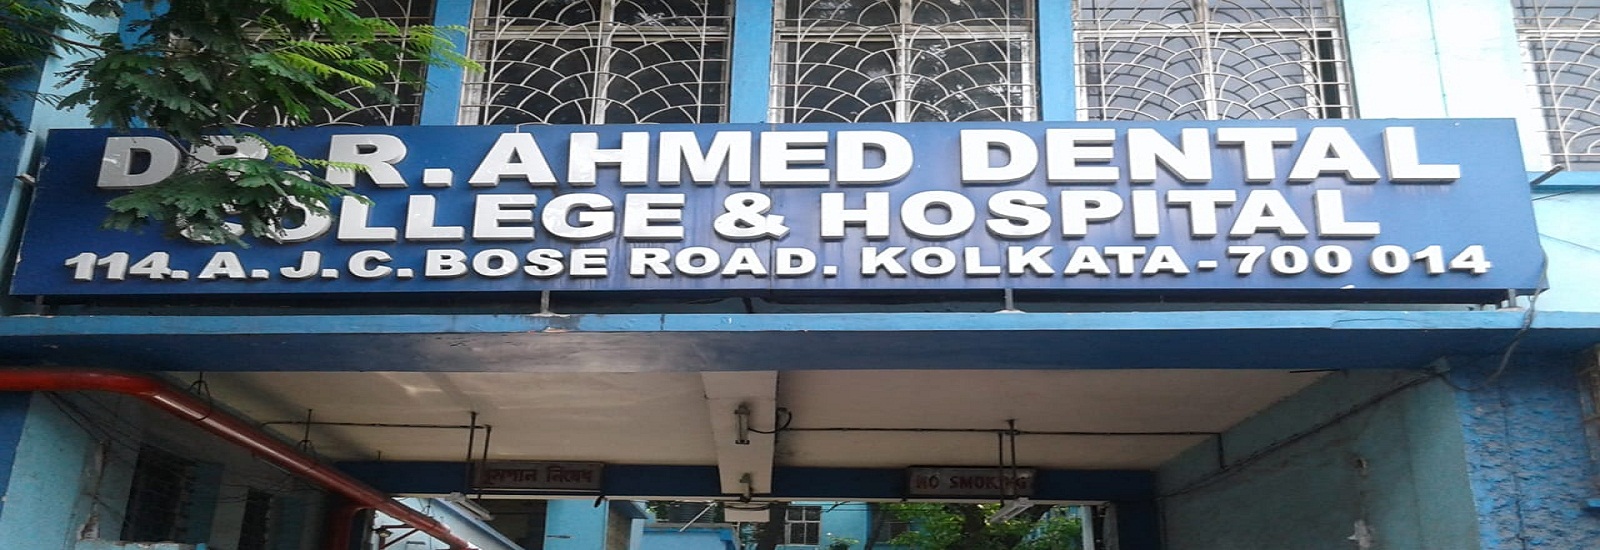 Dr. R. Ahmed Dental College and Hospital, Kolkata Image